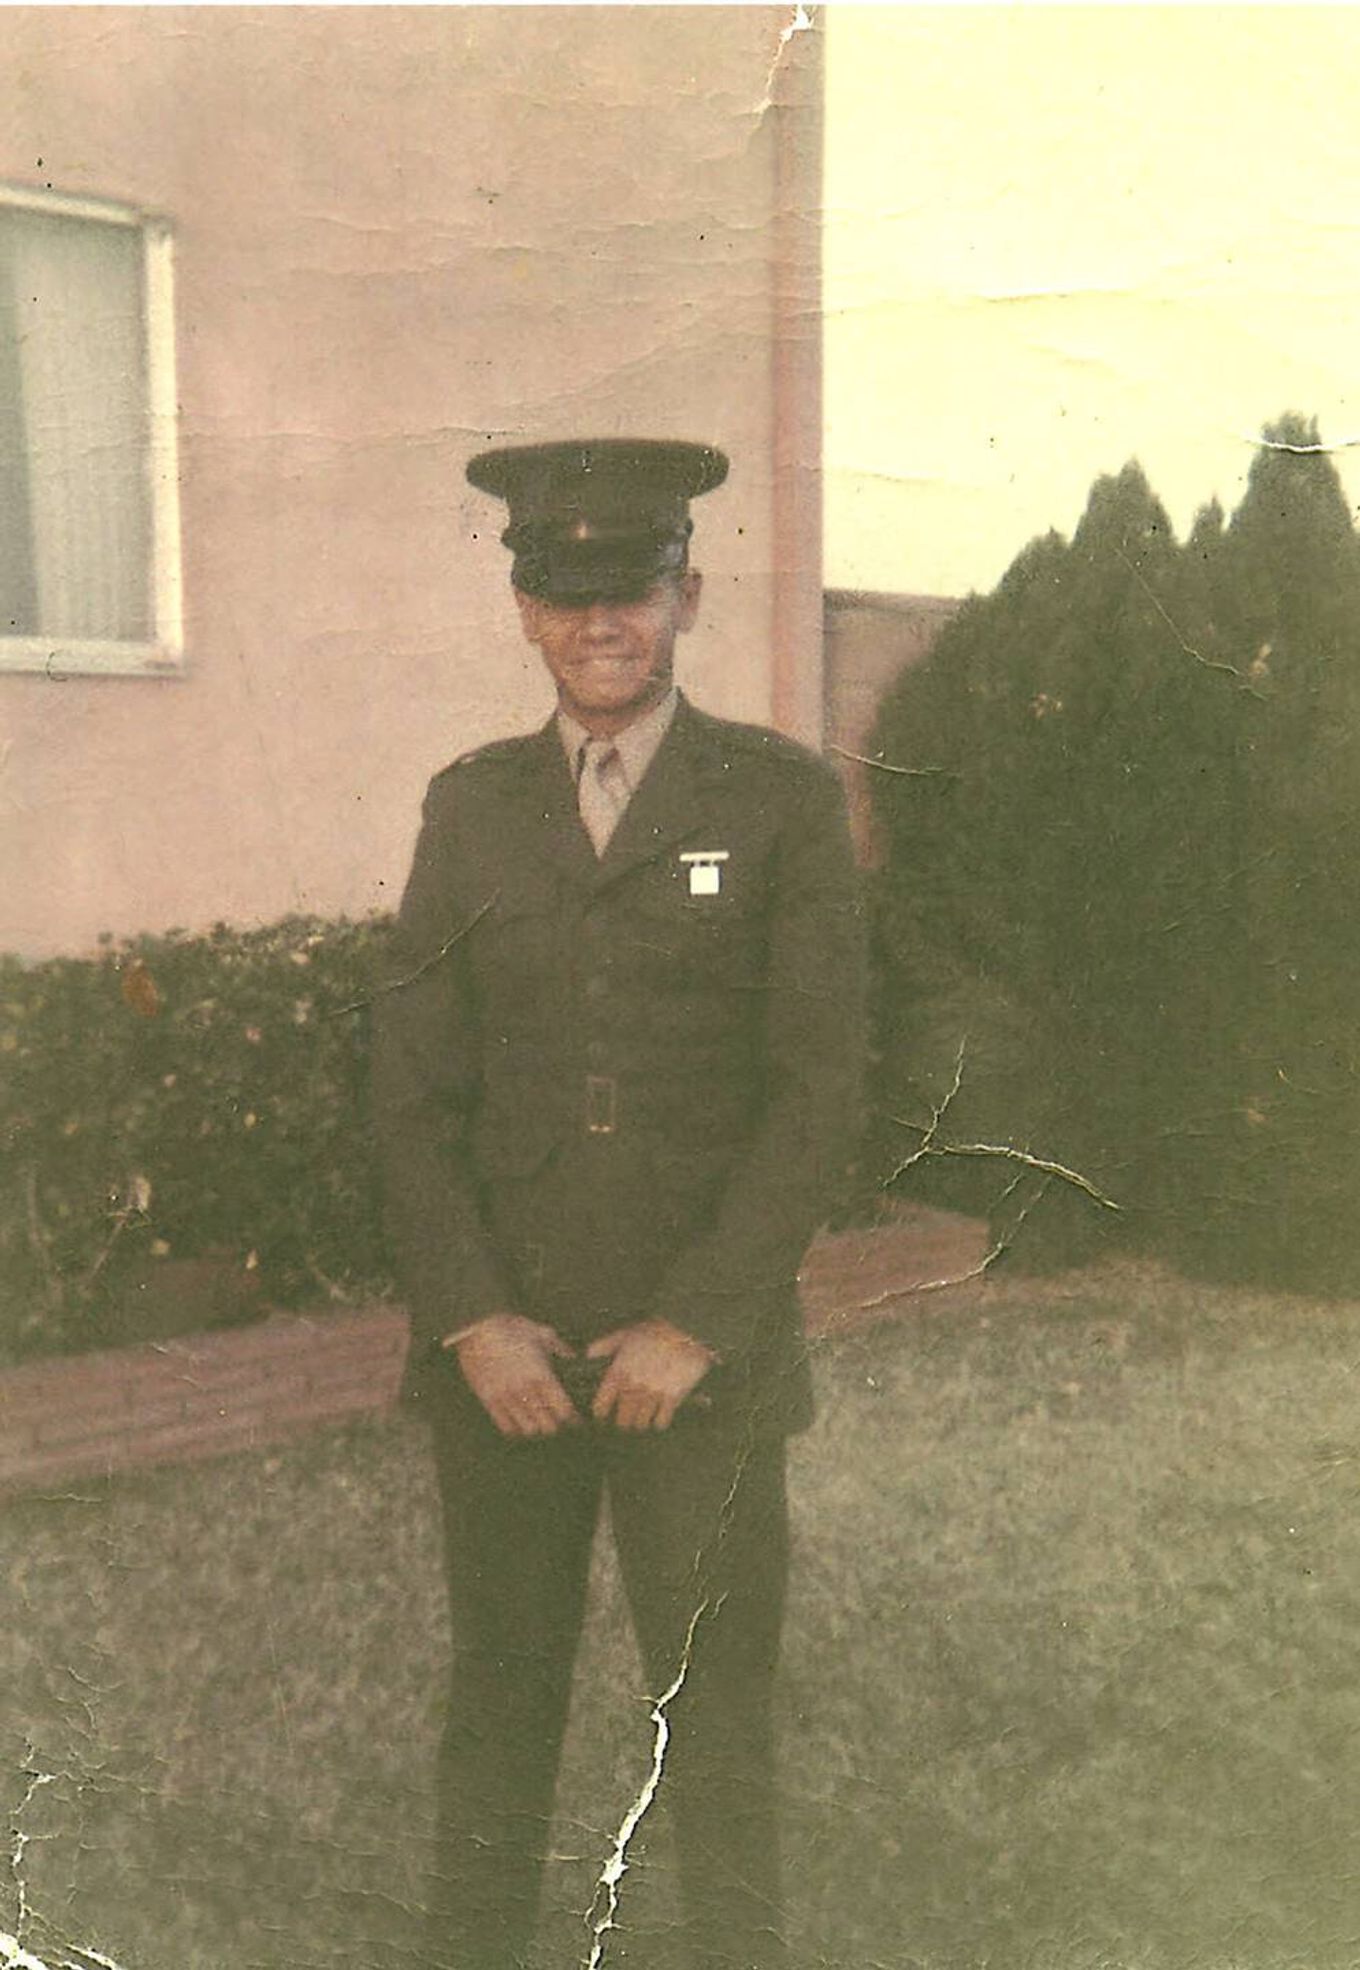 Cpl. Thomas Soliz in California, prior to his deployment to Vietnam. Photo courtesy of the author.